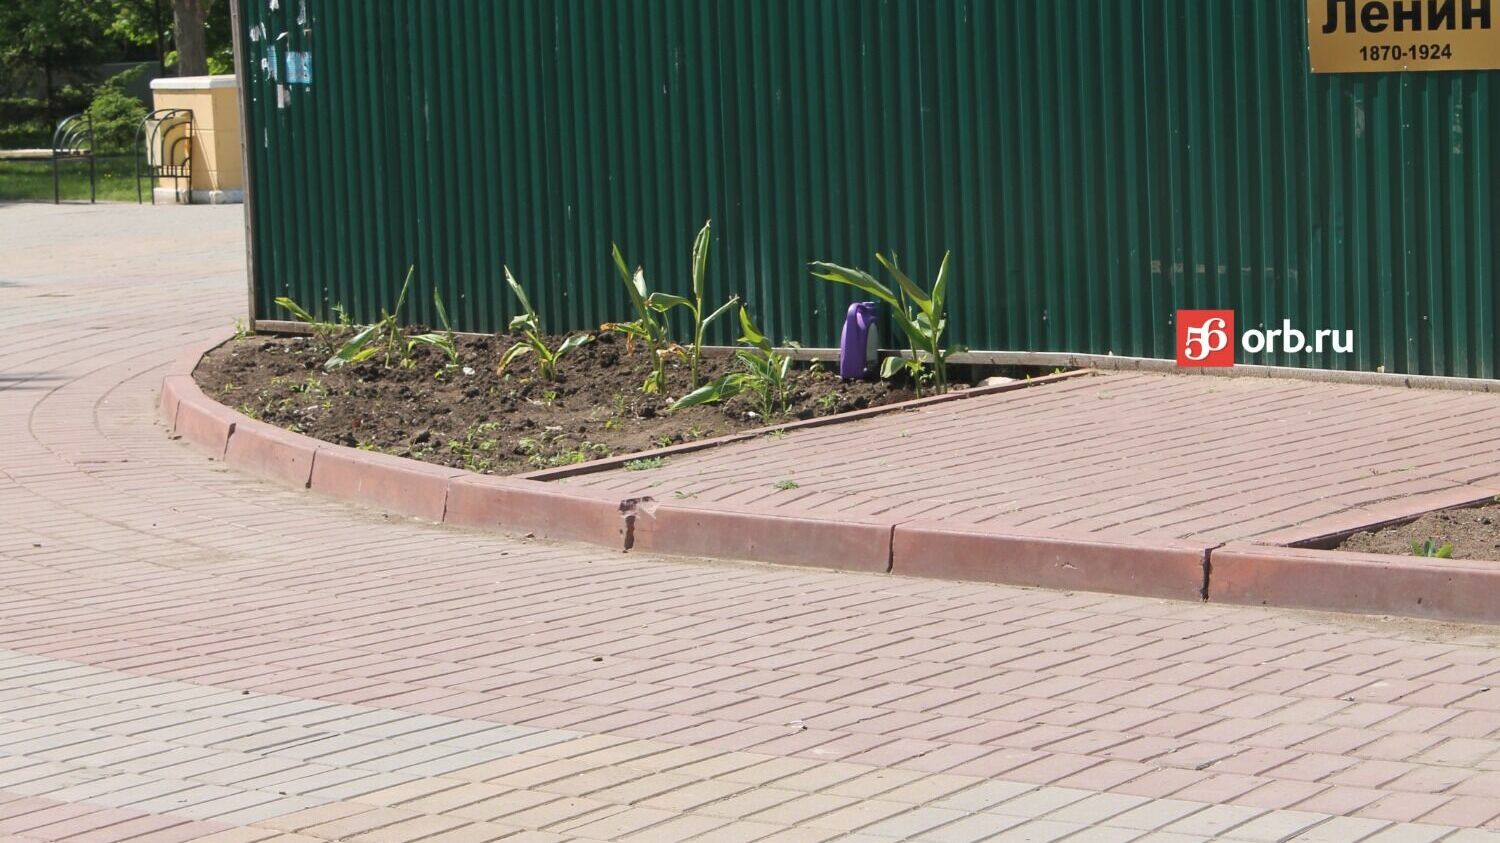 Возле места, где стоял памятник Ленина, посадили кукурузу